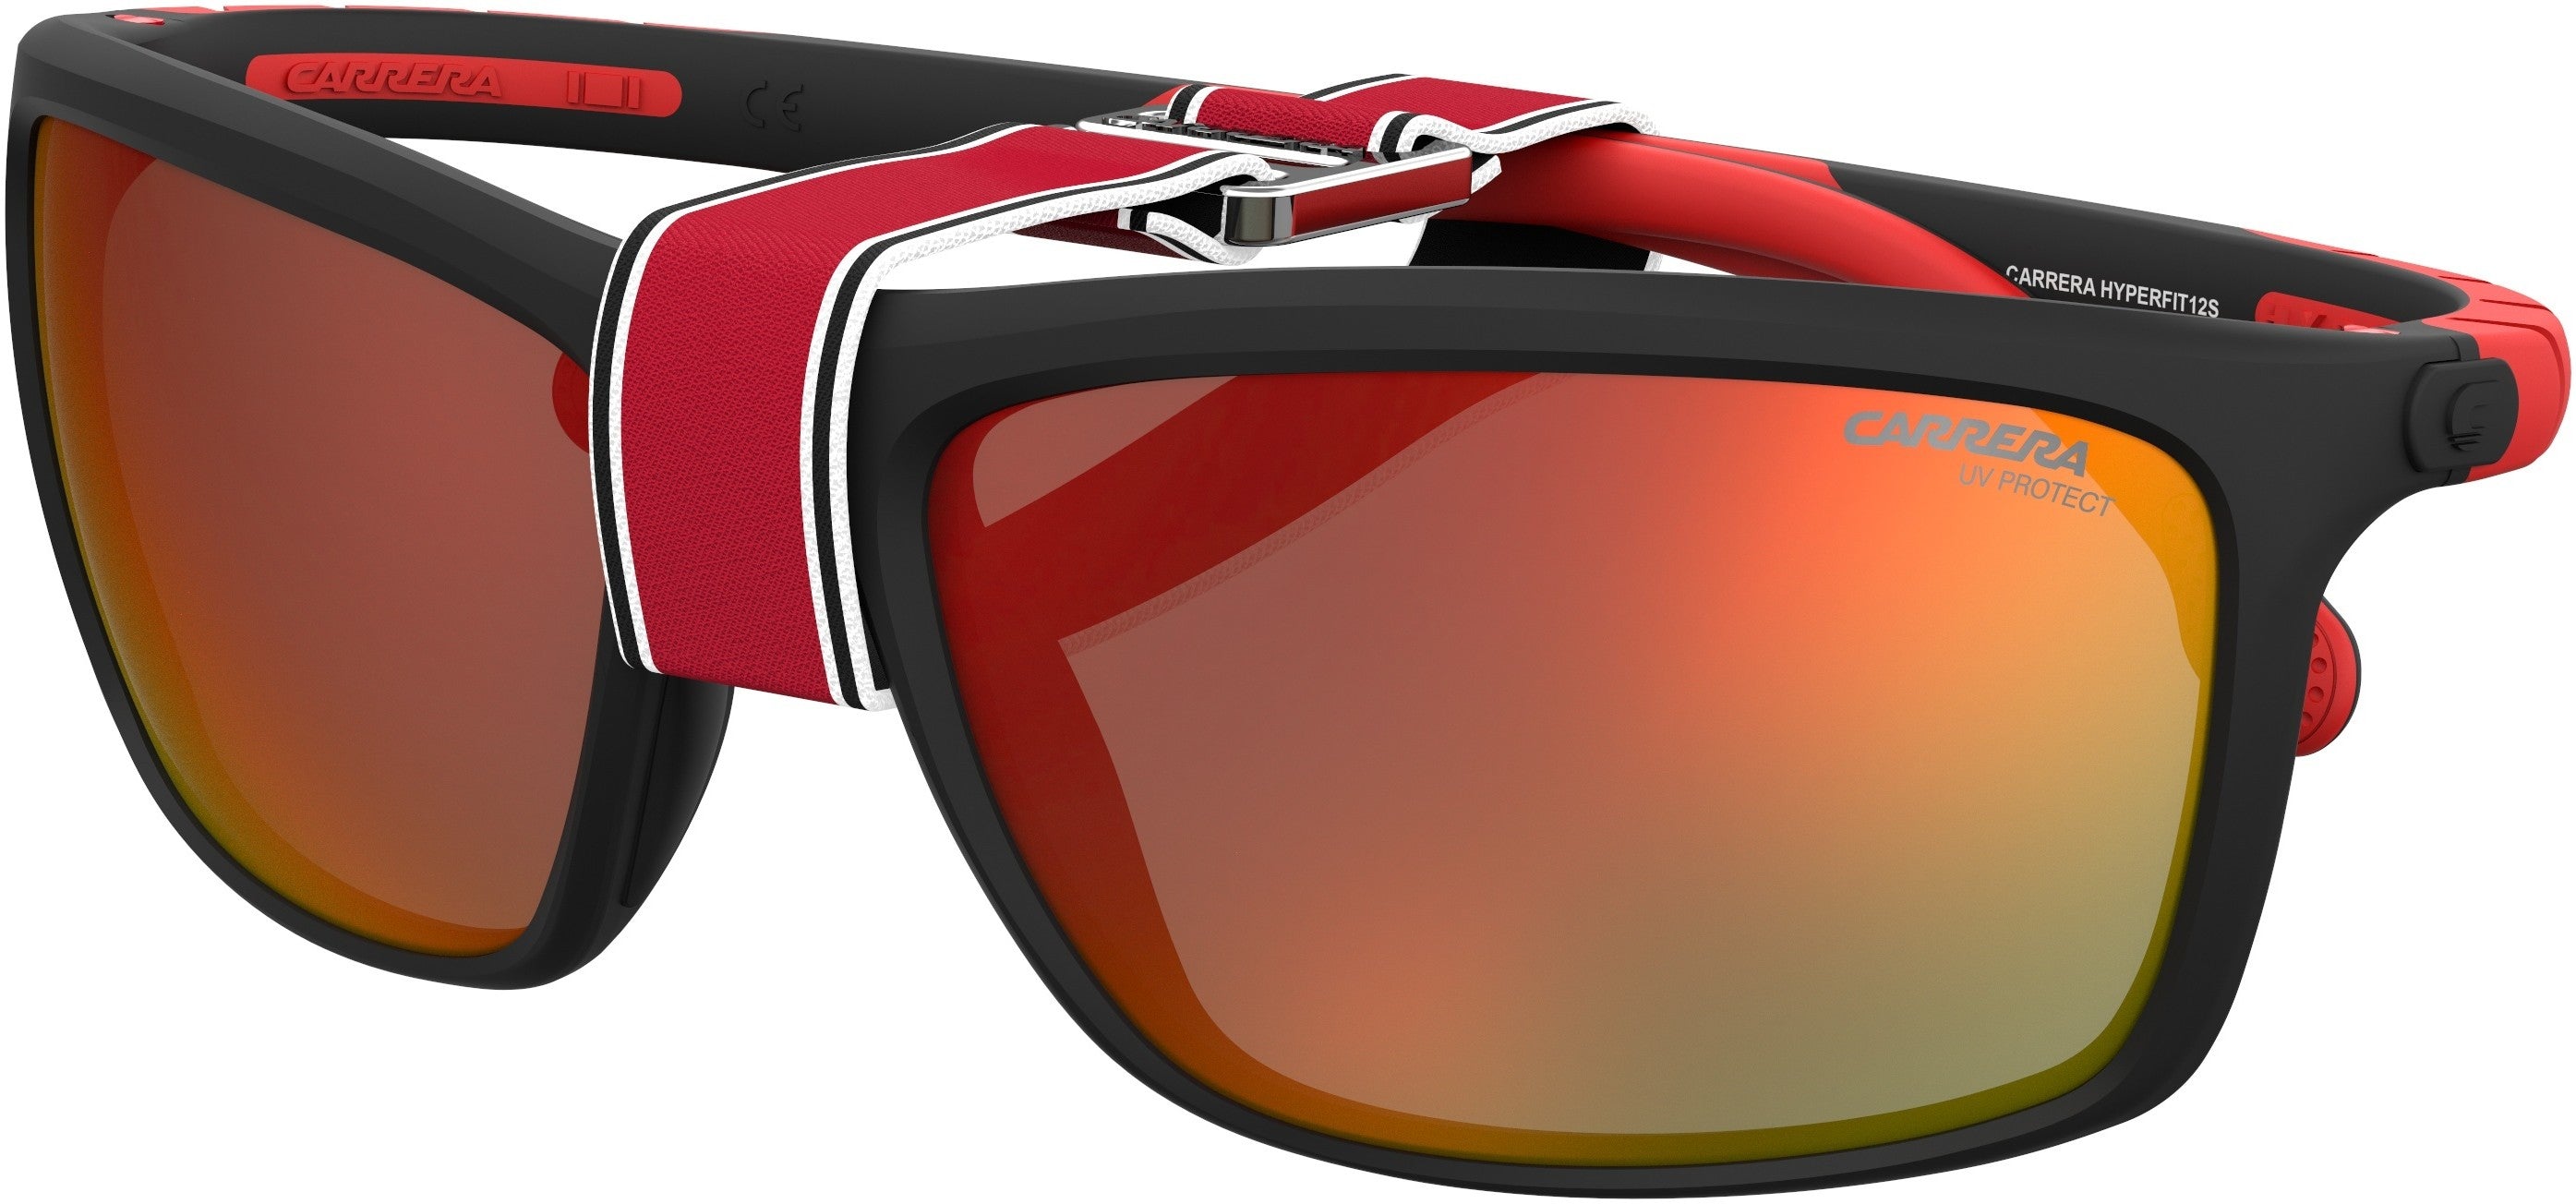 Carrera Hyperfit 12/S Rectangular Sunglasses 0BLX-0BLX  Bkrt Crystal Red (UZ Red Multilayer)